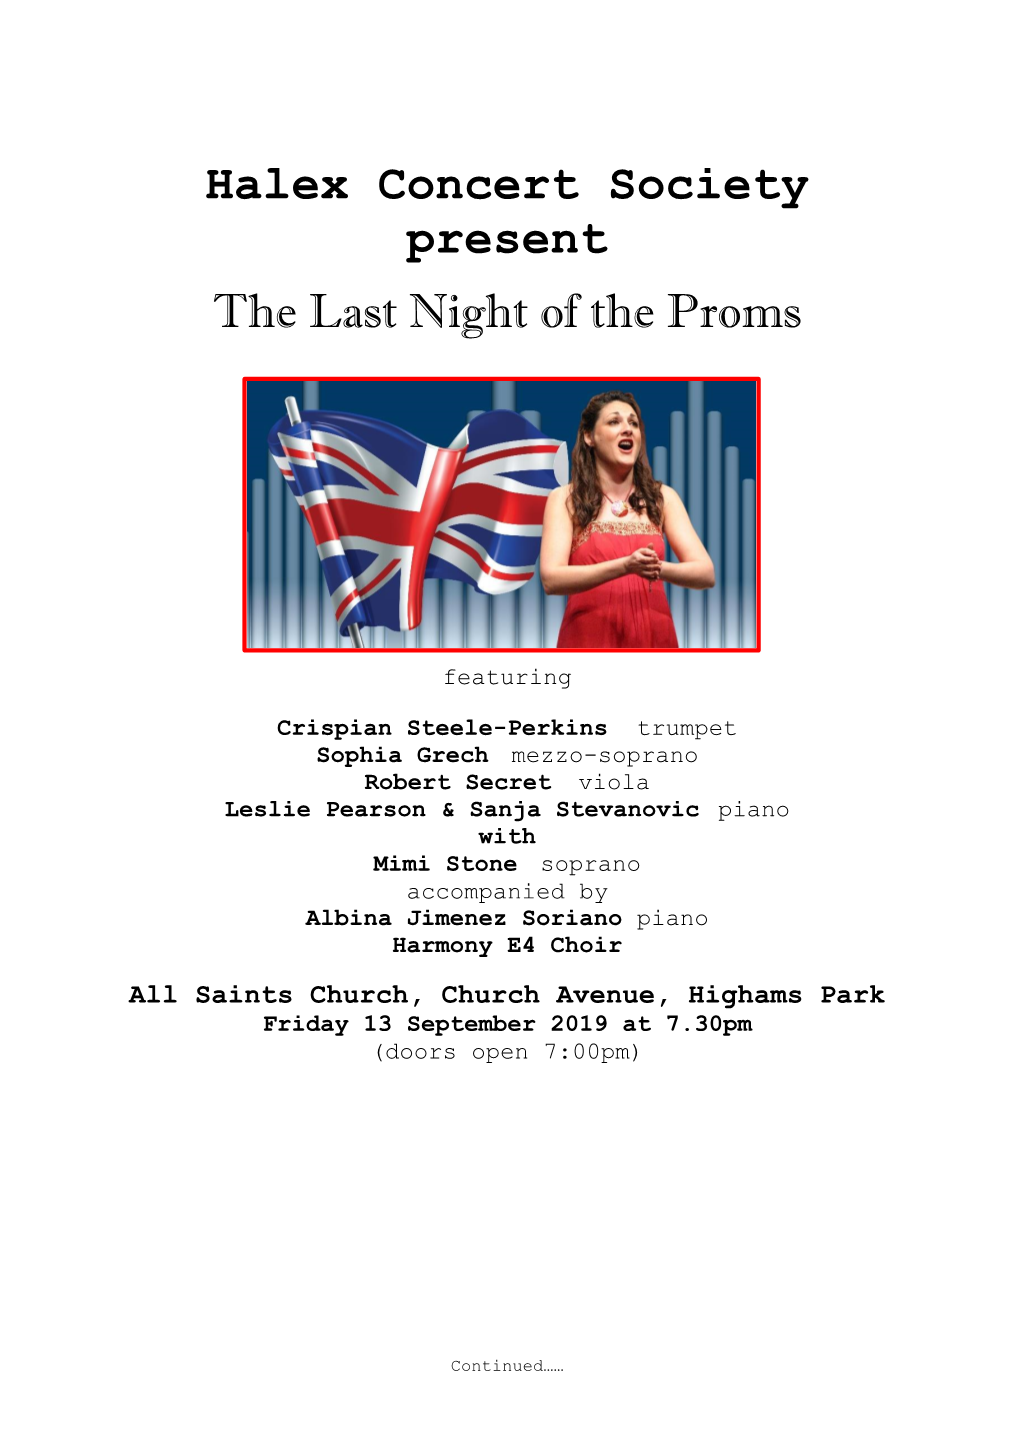 Halex Concert Society Present the Last Night of the Proms